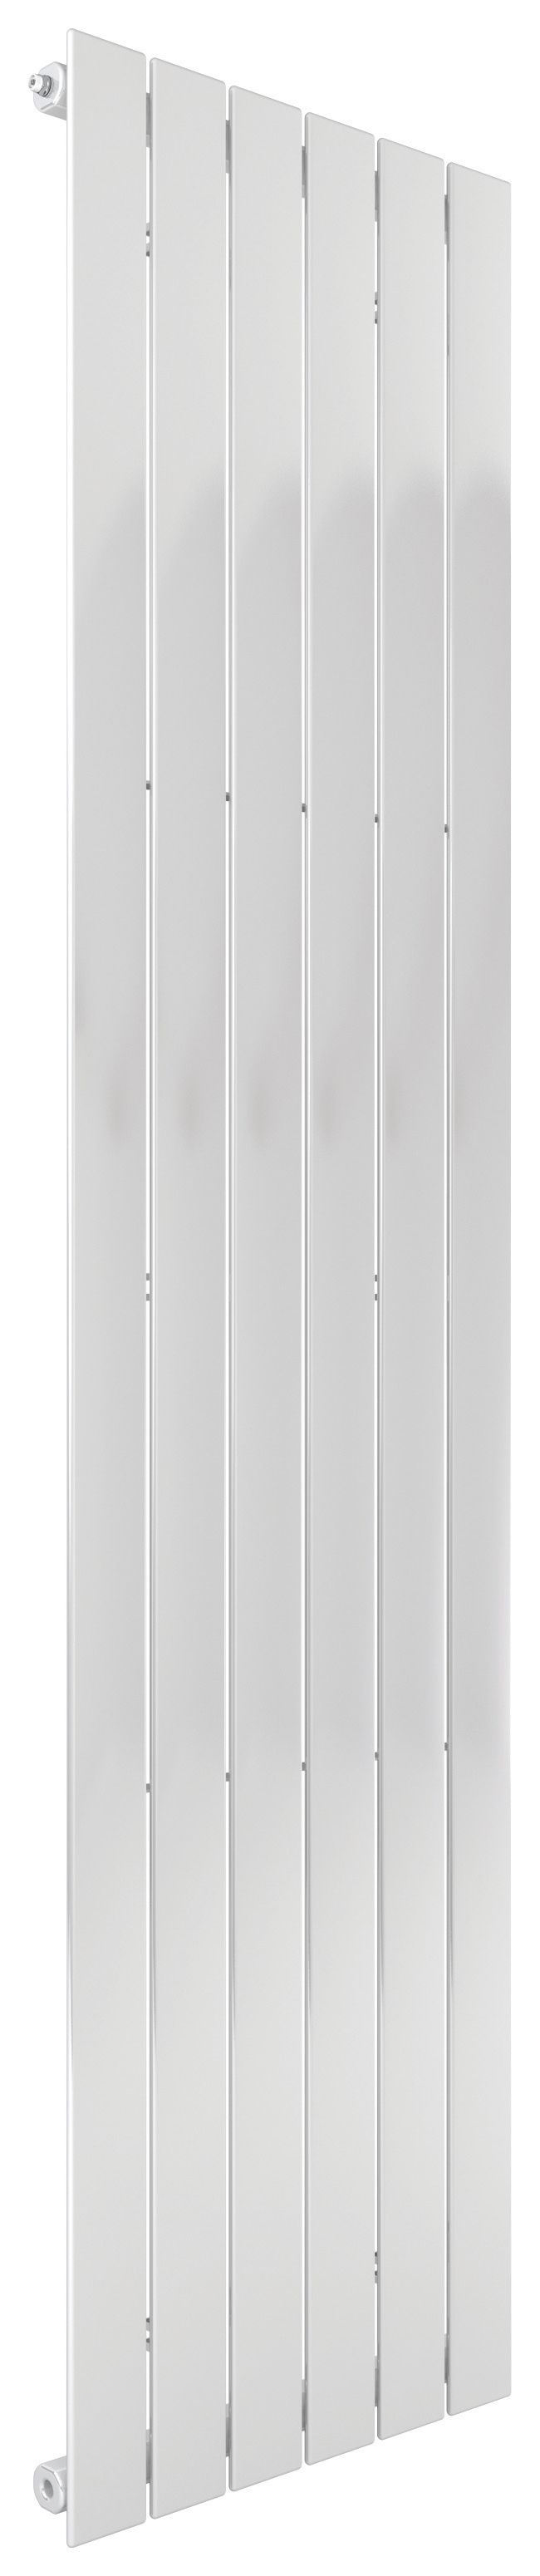 Image of Henrad Verona Vertical Designer Radiator - White 1800 x 440 mm